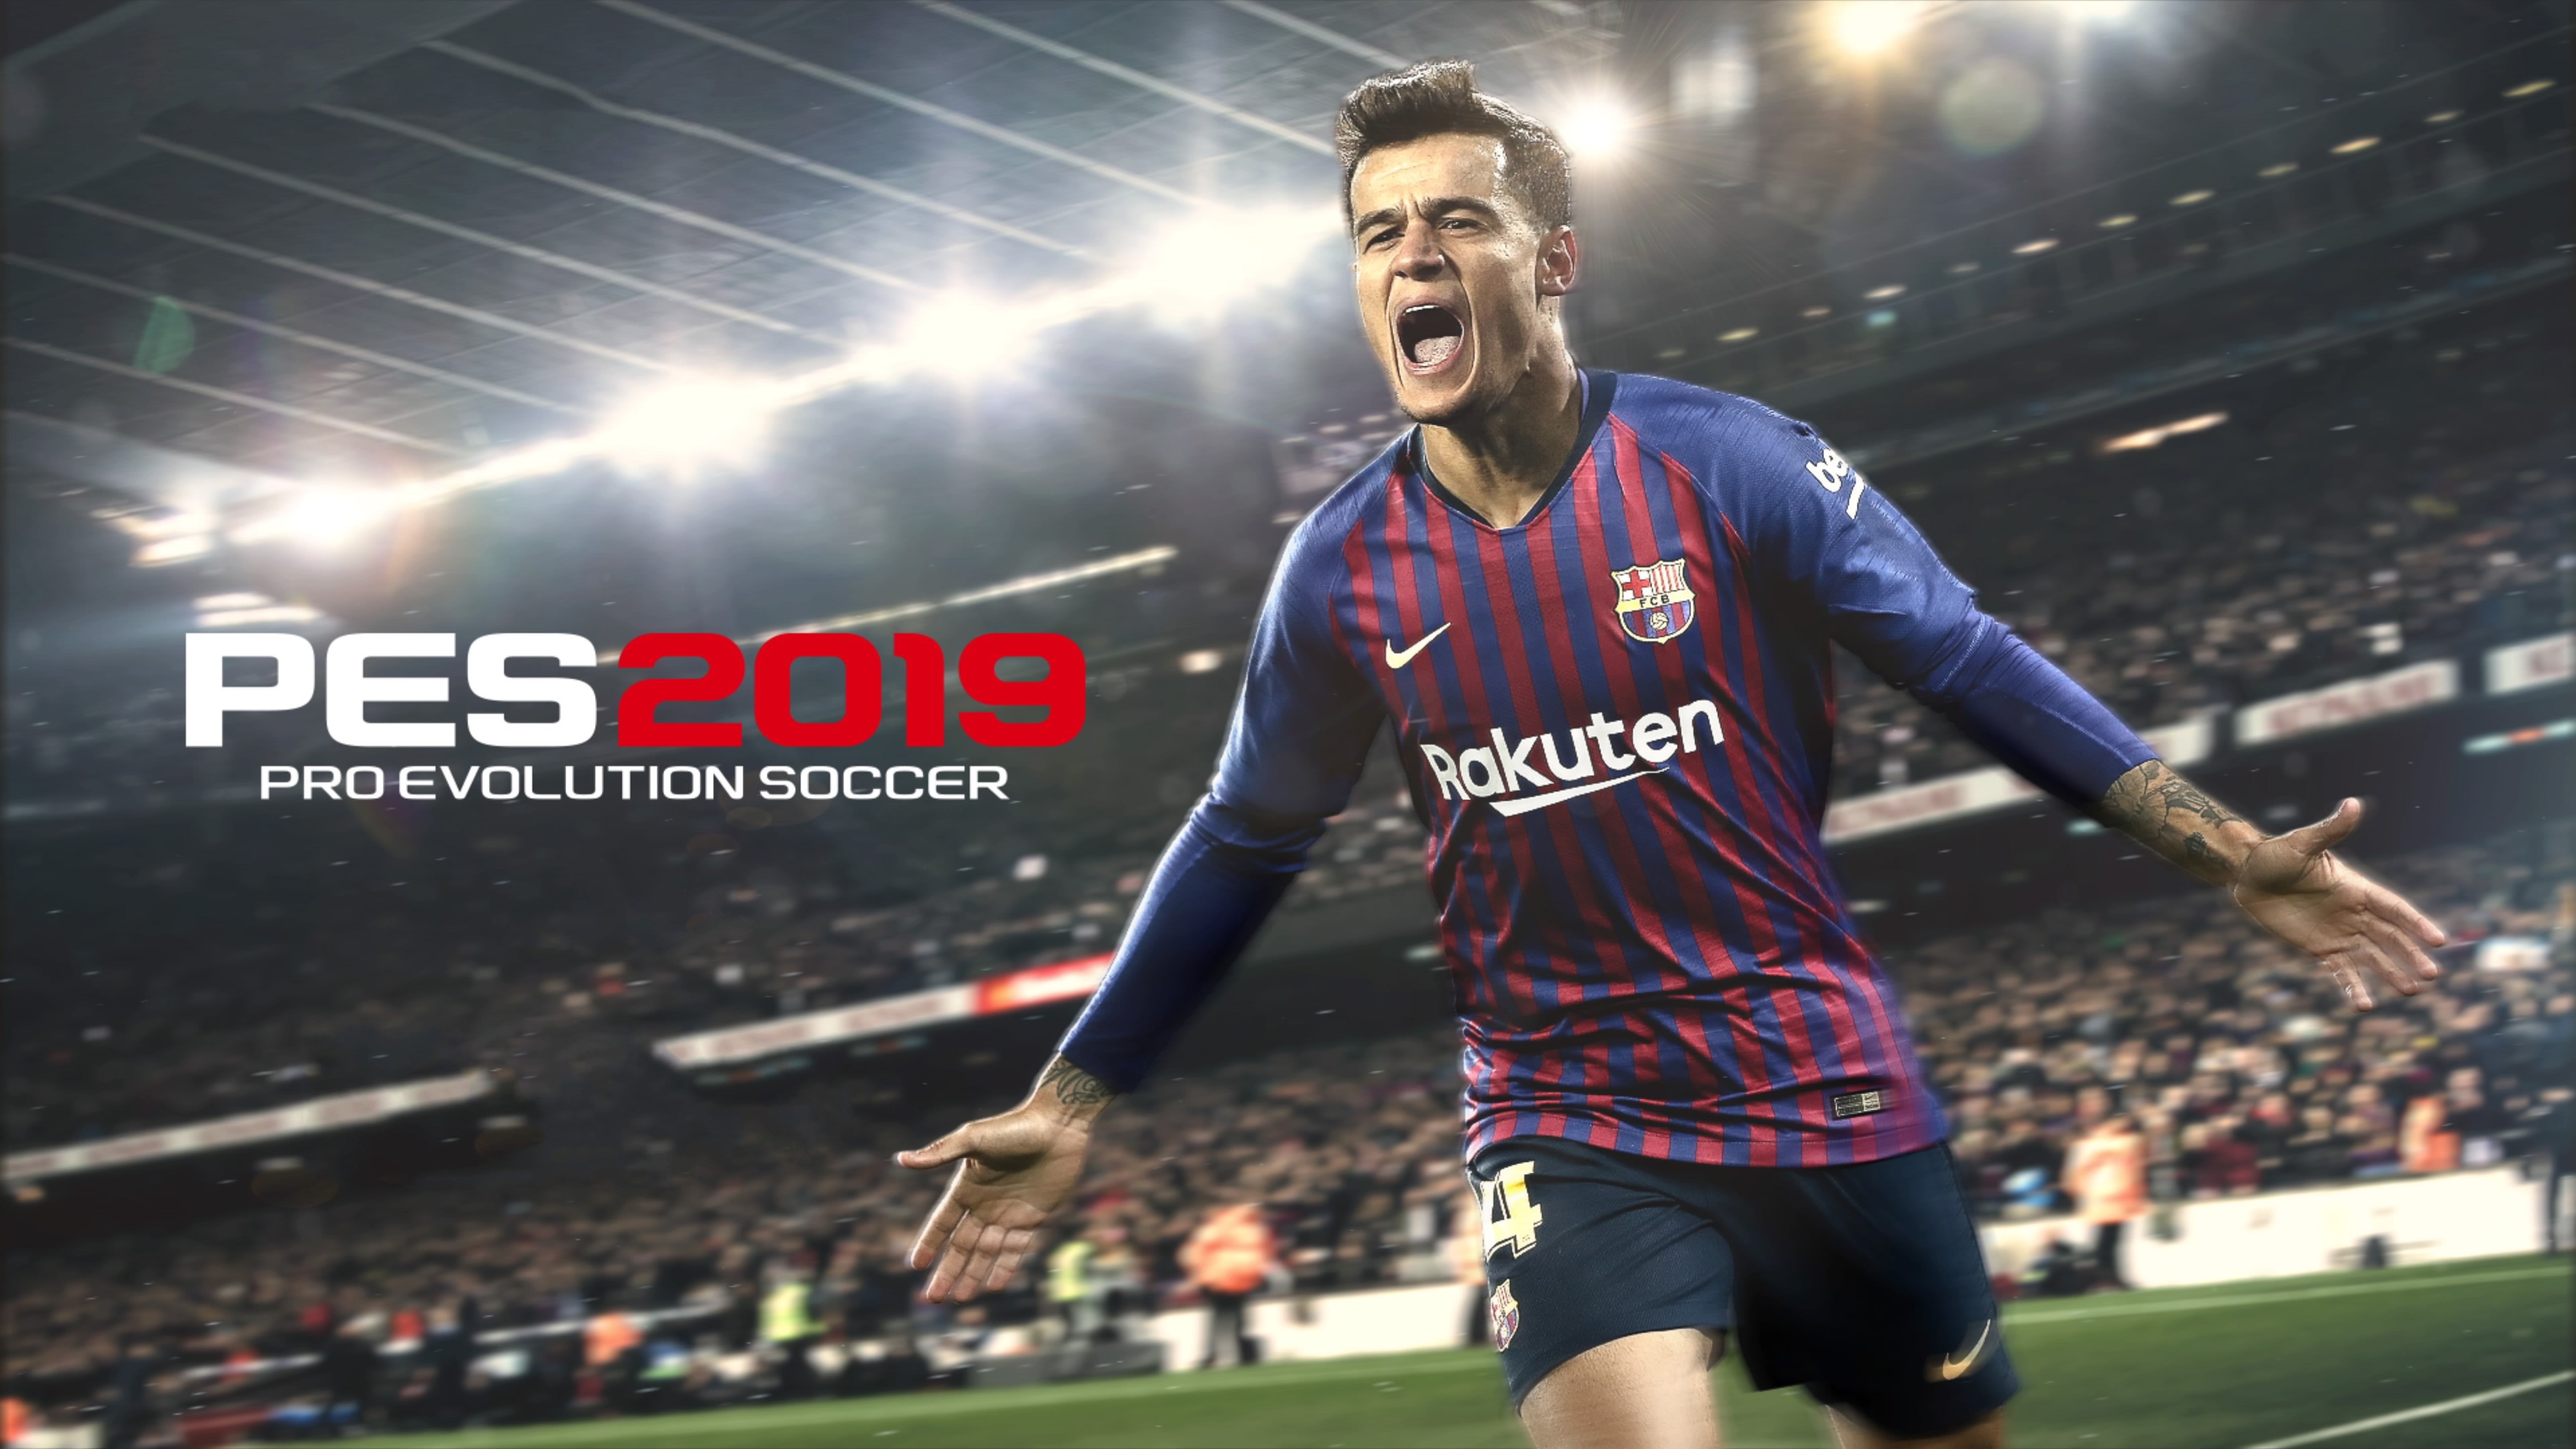 pes 2019 free download pro evolution soccer 19 pc game